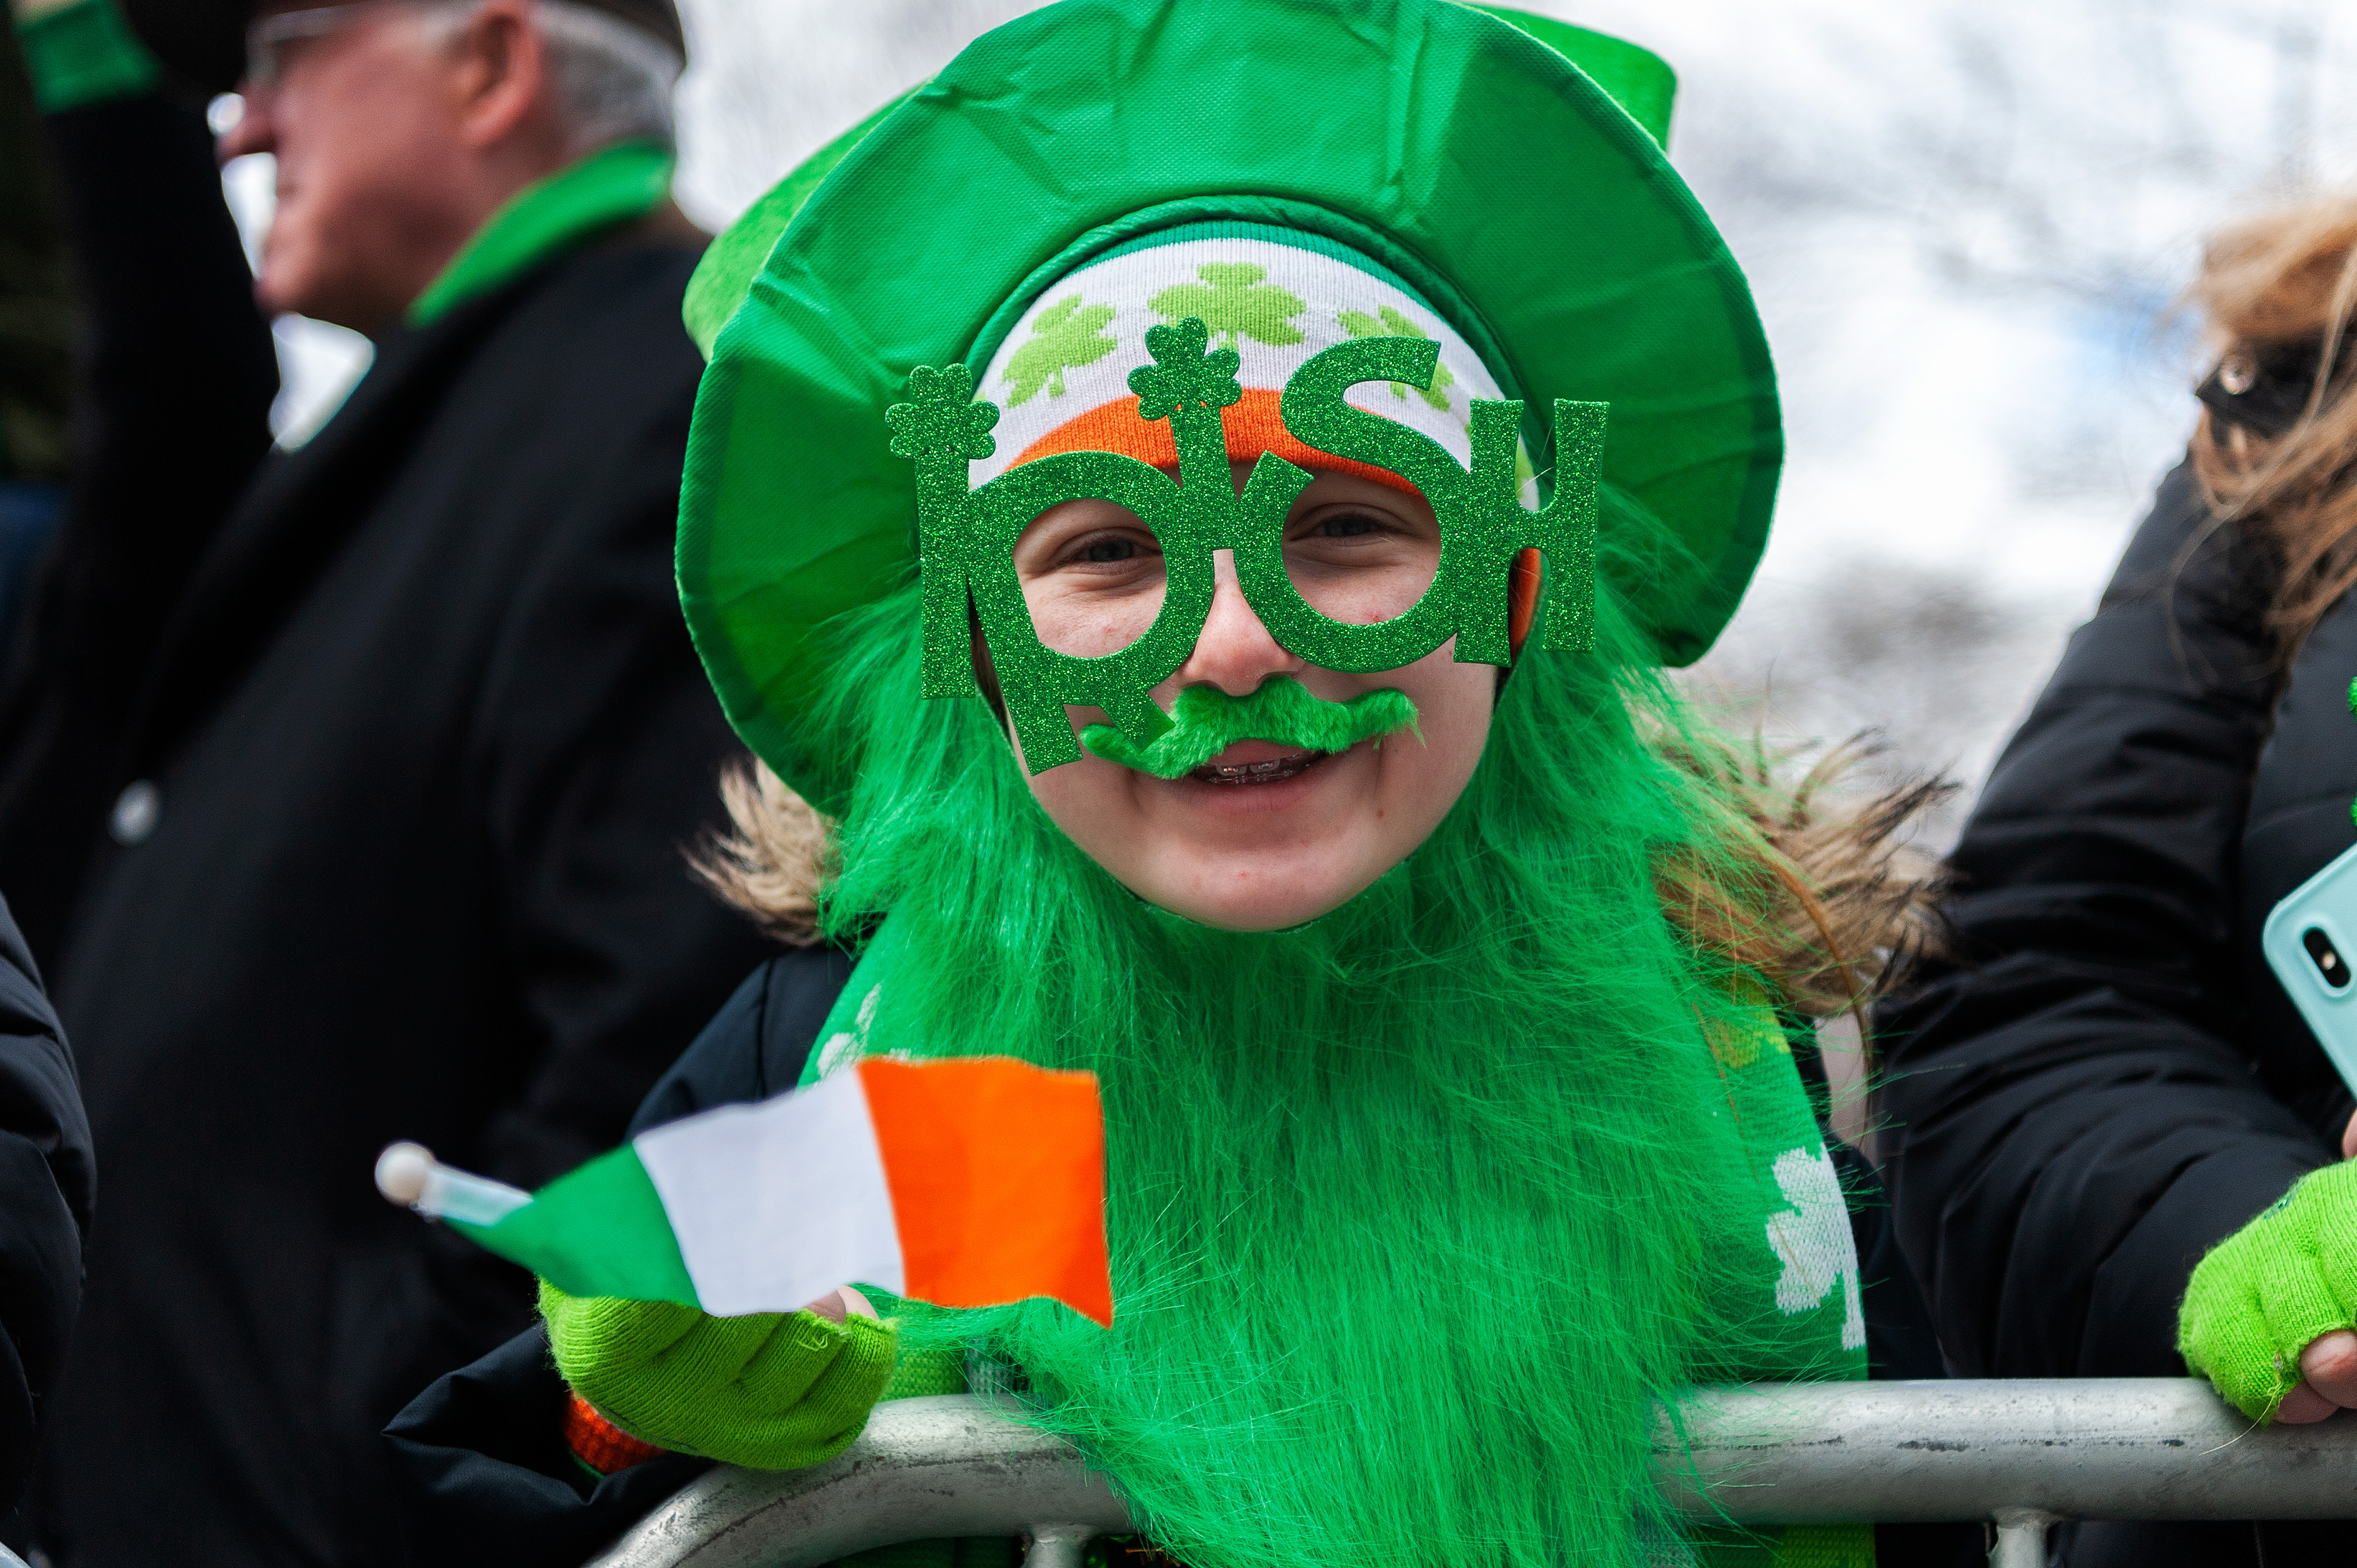 Irish st. Вечеринка Святого Патрика. Ireland St Patrick's Day. Компания празднует Святого Патрика. День Святого Патрика украшение Радуга из лент.